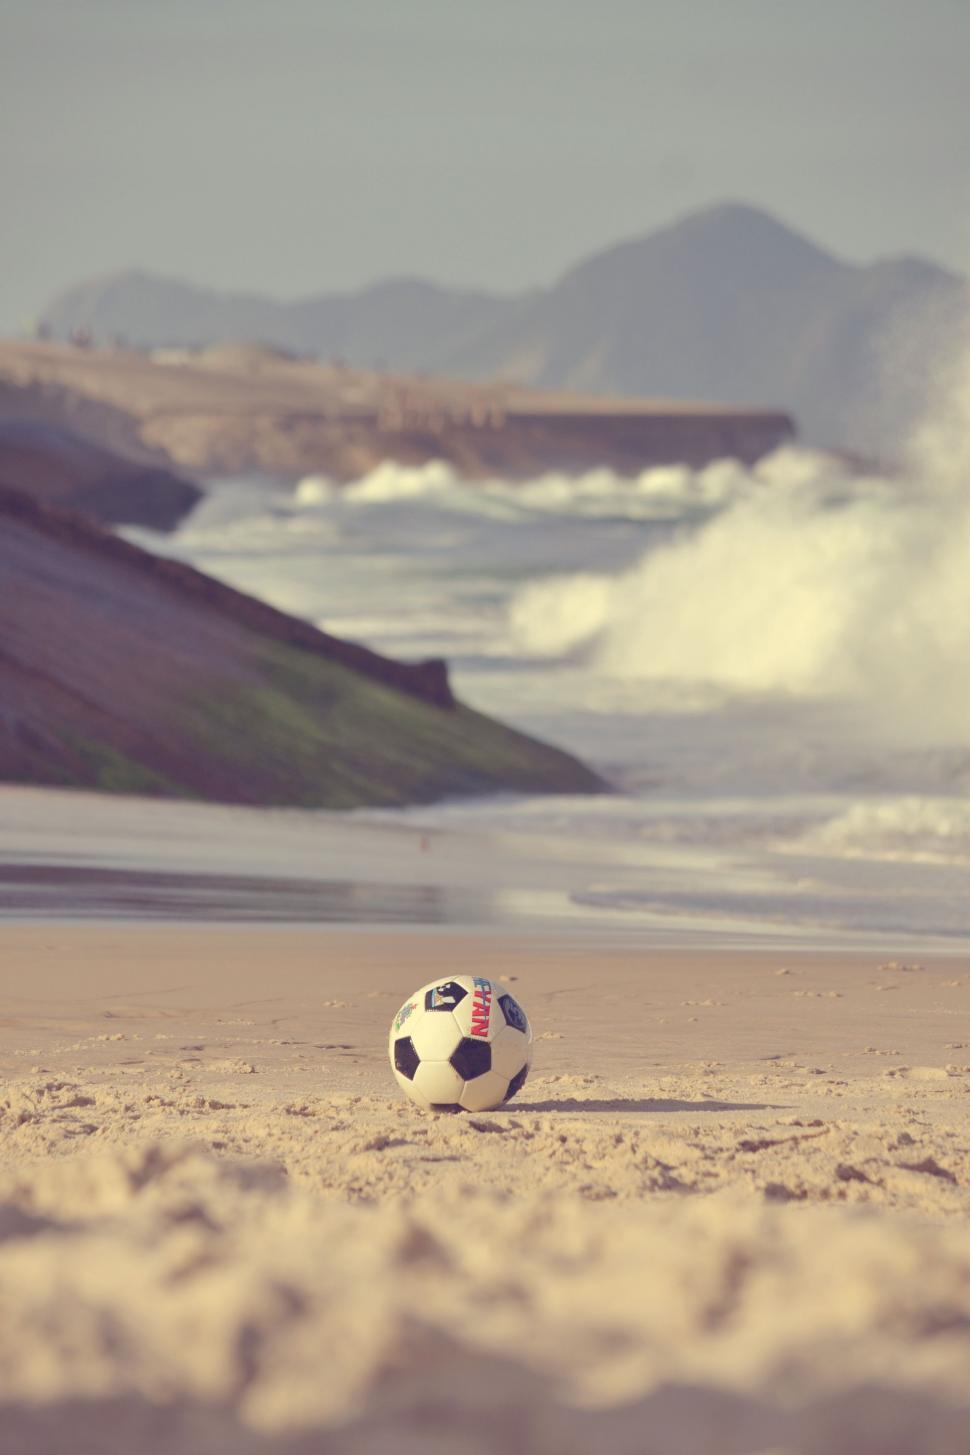 Free Image of Football on Beach  